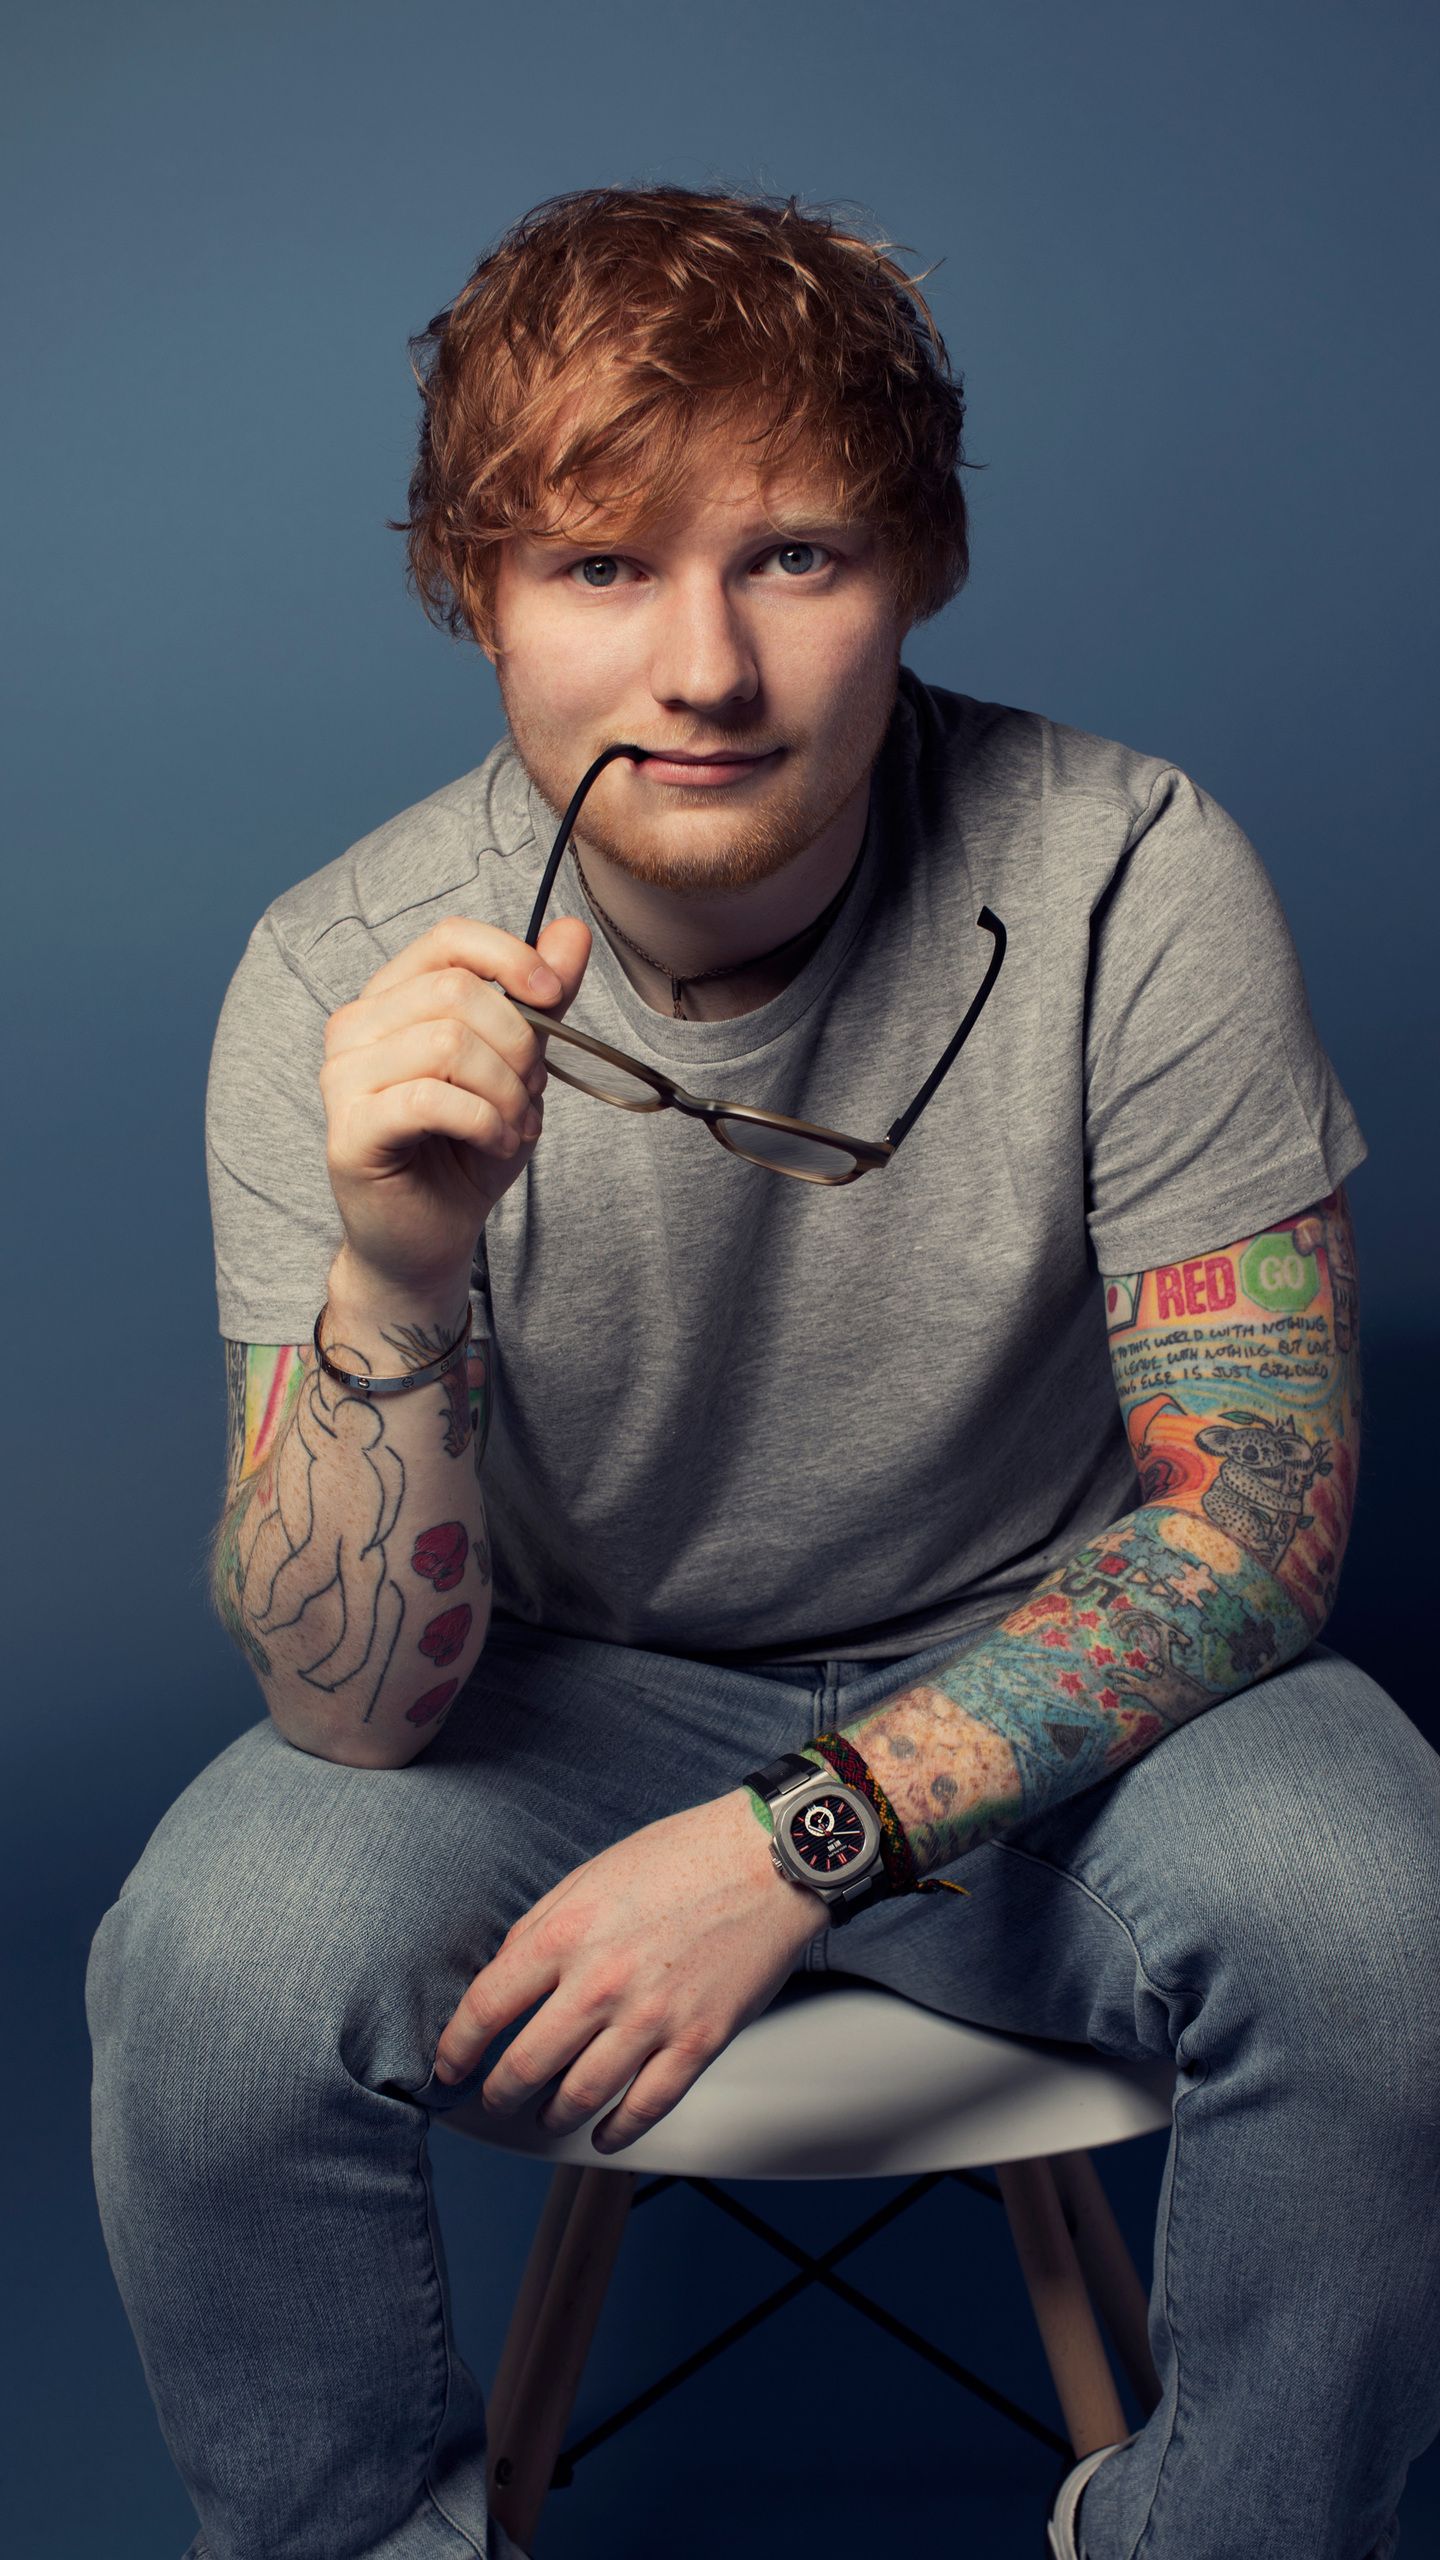  Ed Sheeran Hintergrundbild 1440x2560. Ed Sheeran 4k Samsung Galaxy S S7 , Google Pixel XL , Nexus 6P , LG G5 HD 4k Wallpaper, Image, Background, Photo and Picture